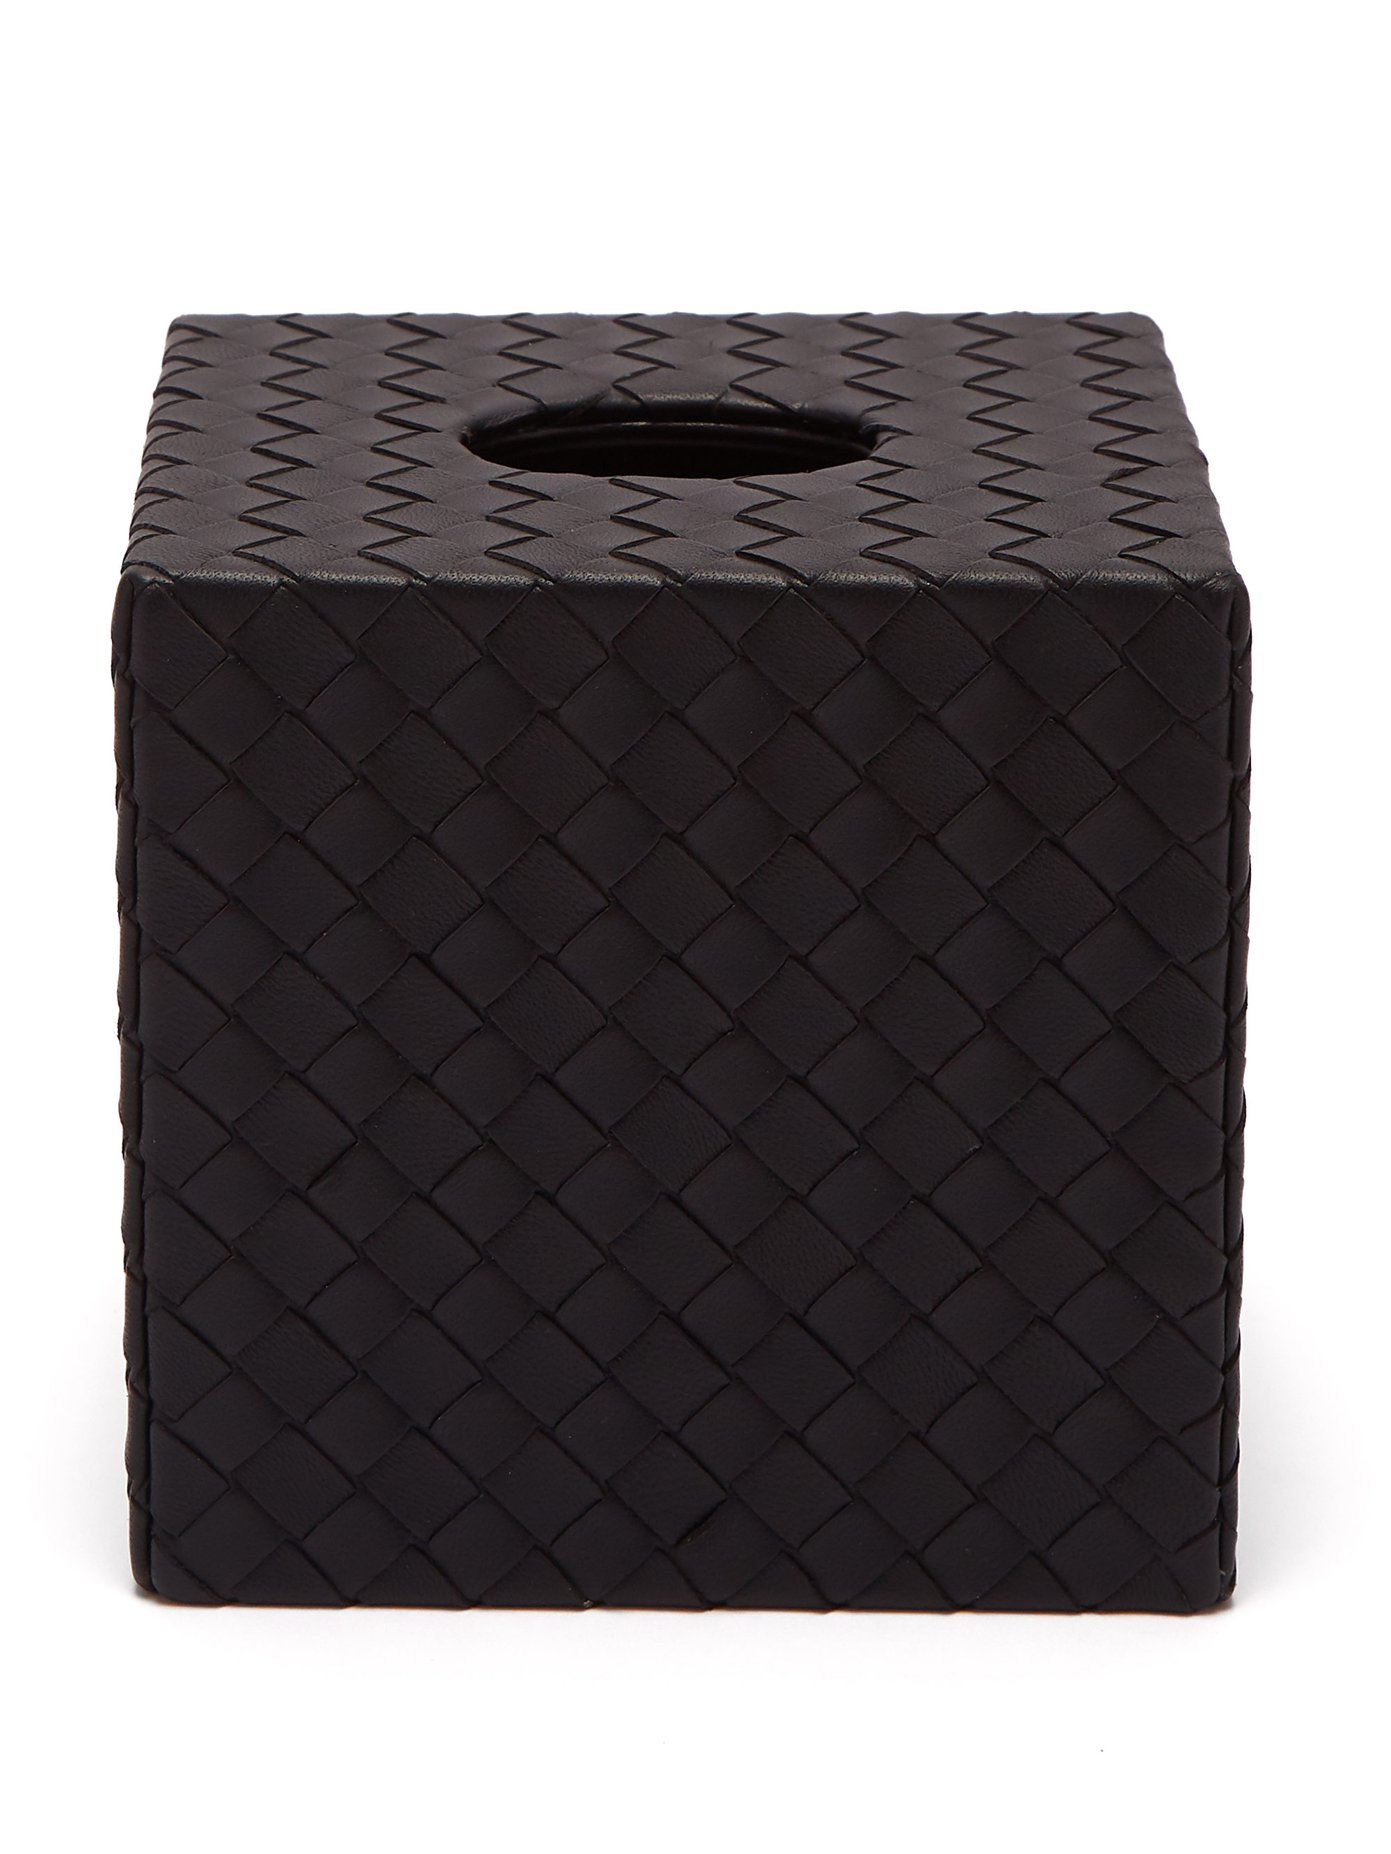 black leather tissue box cover